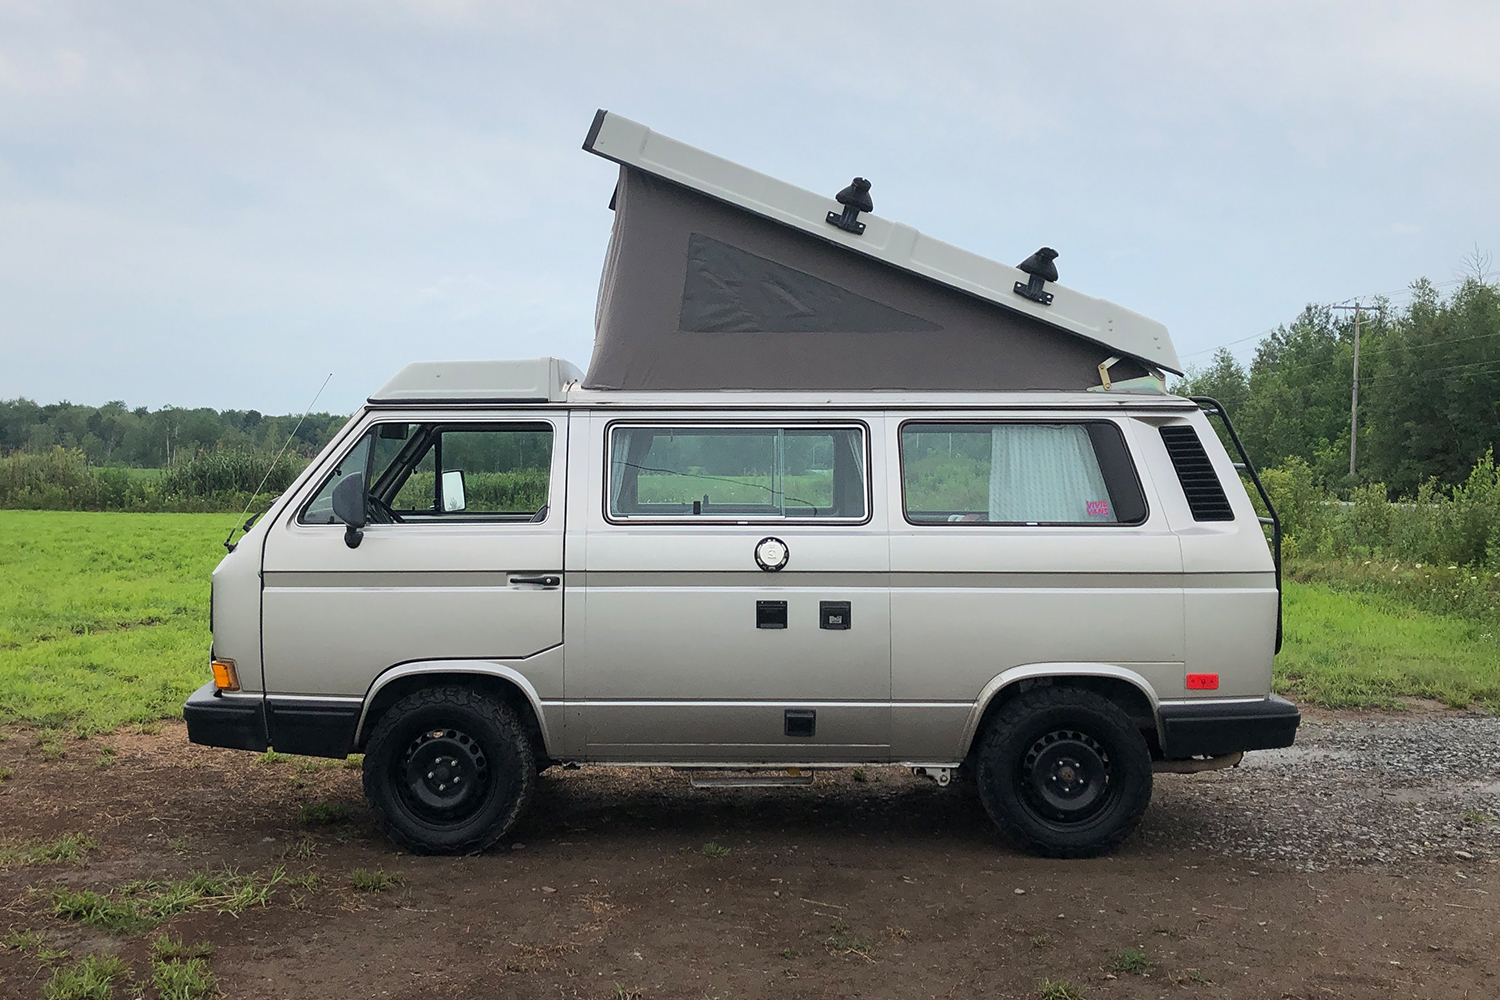 VW's New Camper Van Isn't Coming Here, But We Drove It Anyway